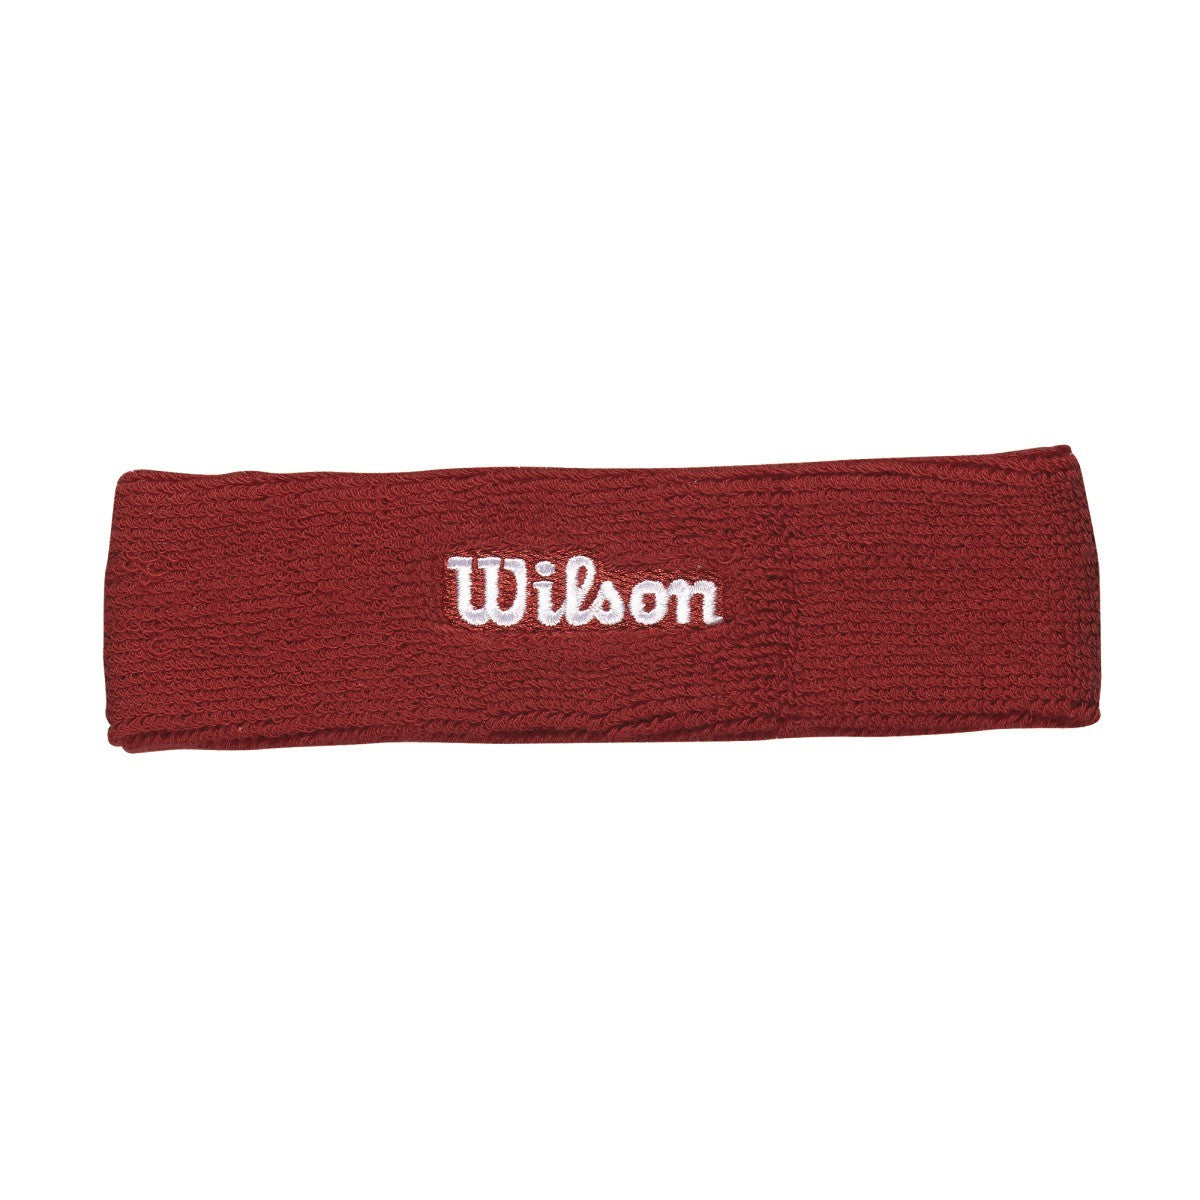 Wilson Headband - atr-sports